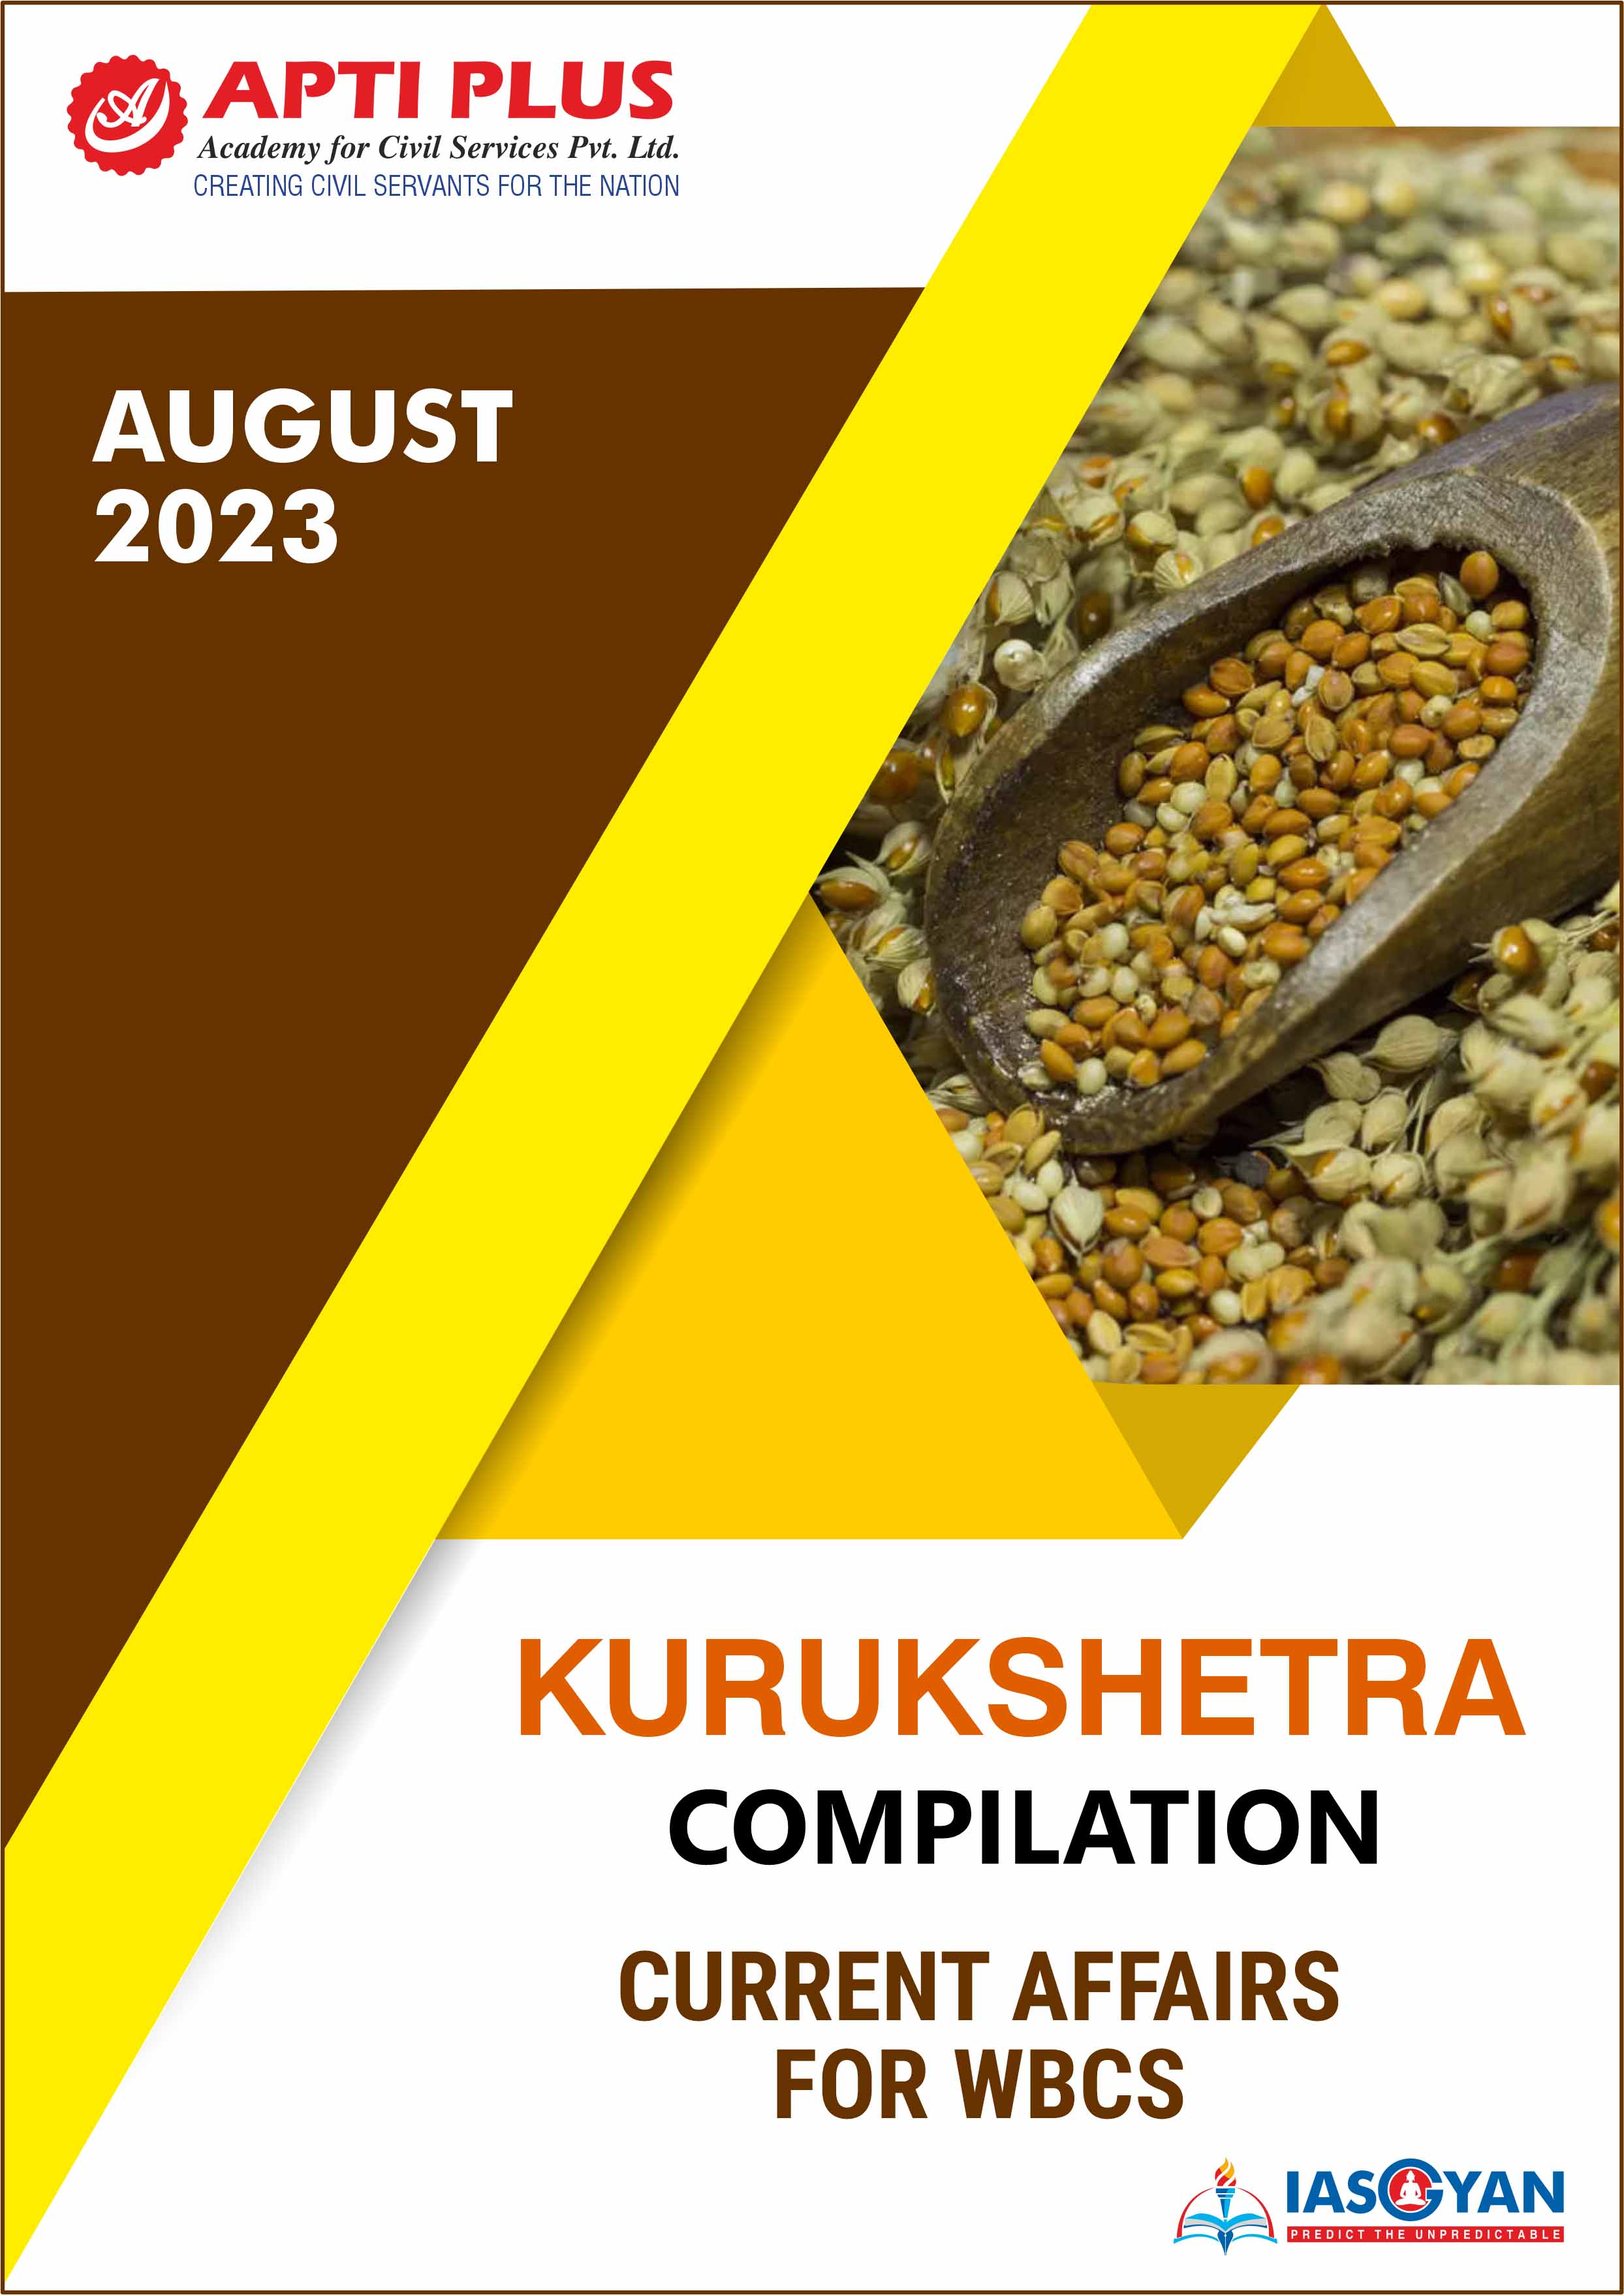 KURUKSHETRA COMPILATION AUGUST 2023